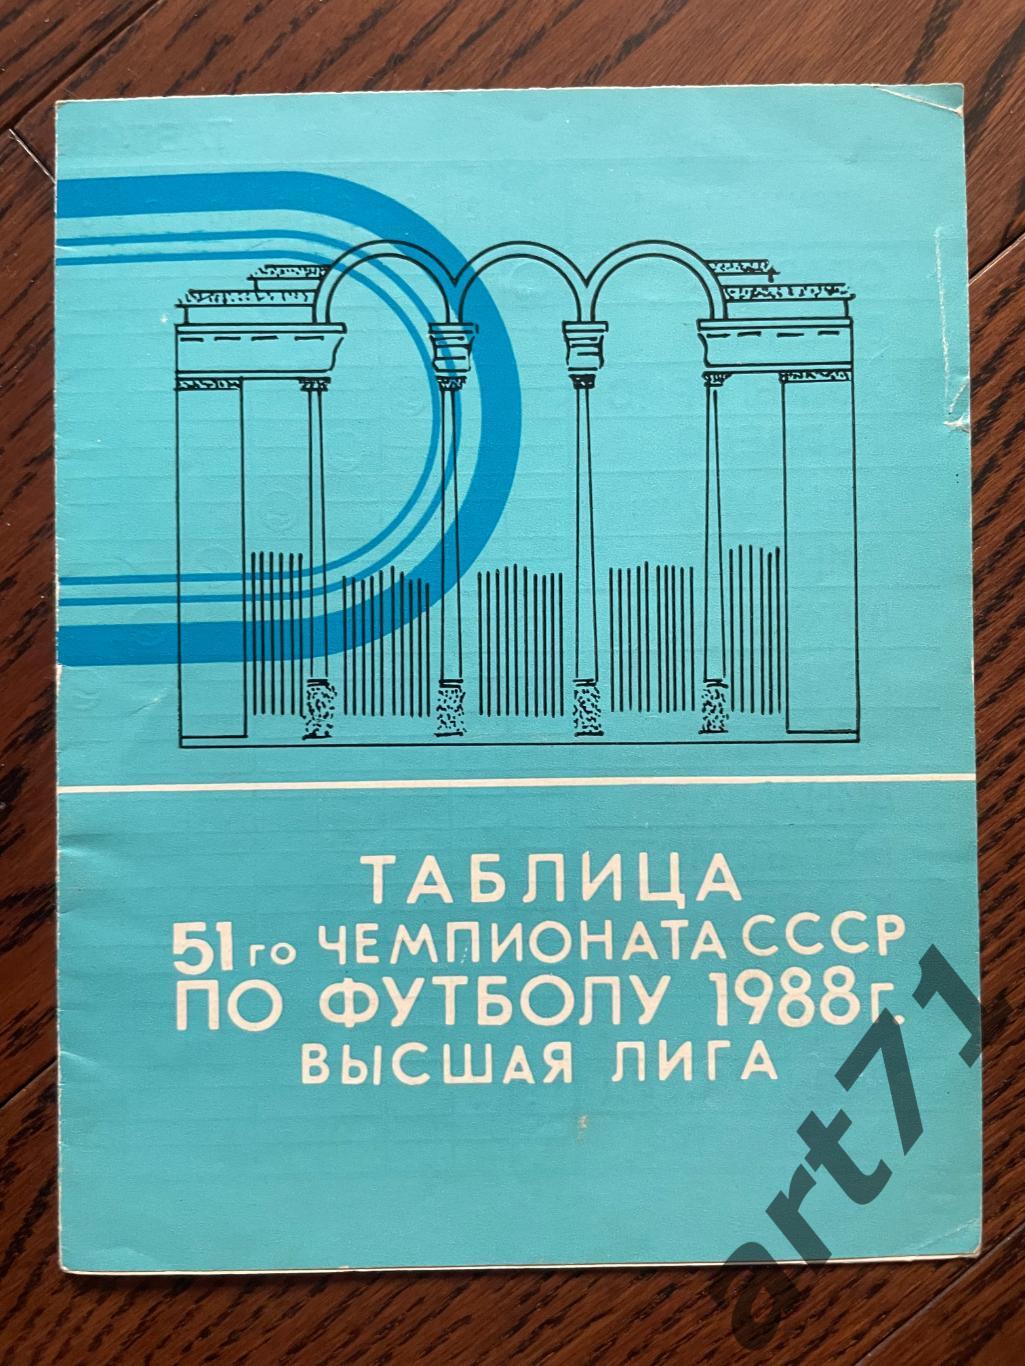 Минск 1988. Таблица.